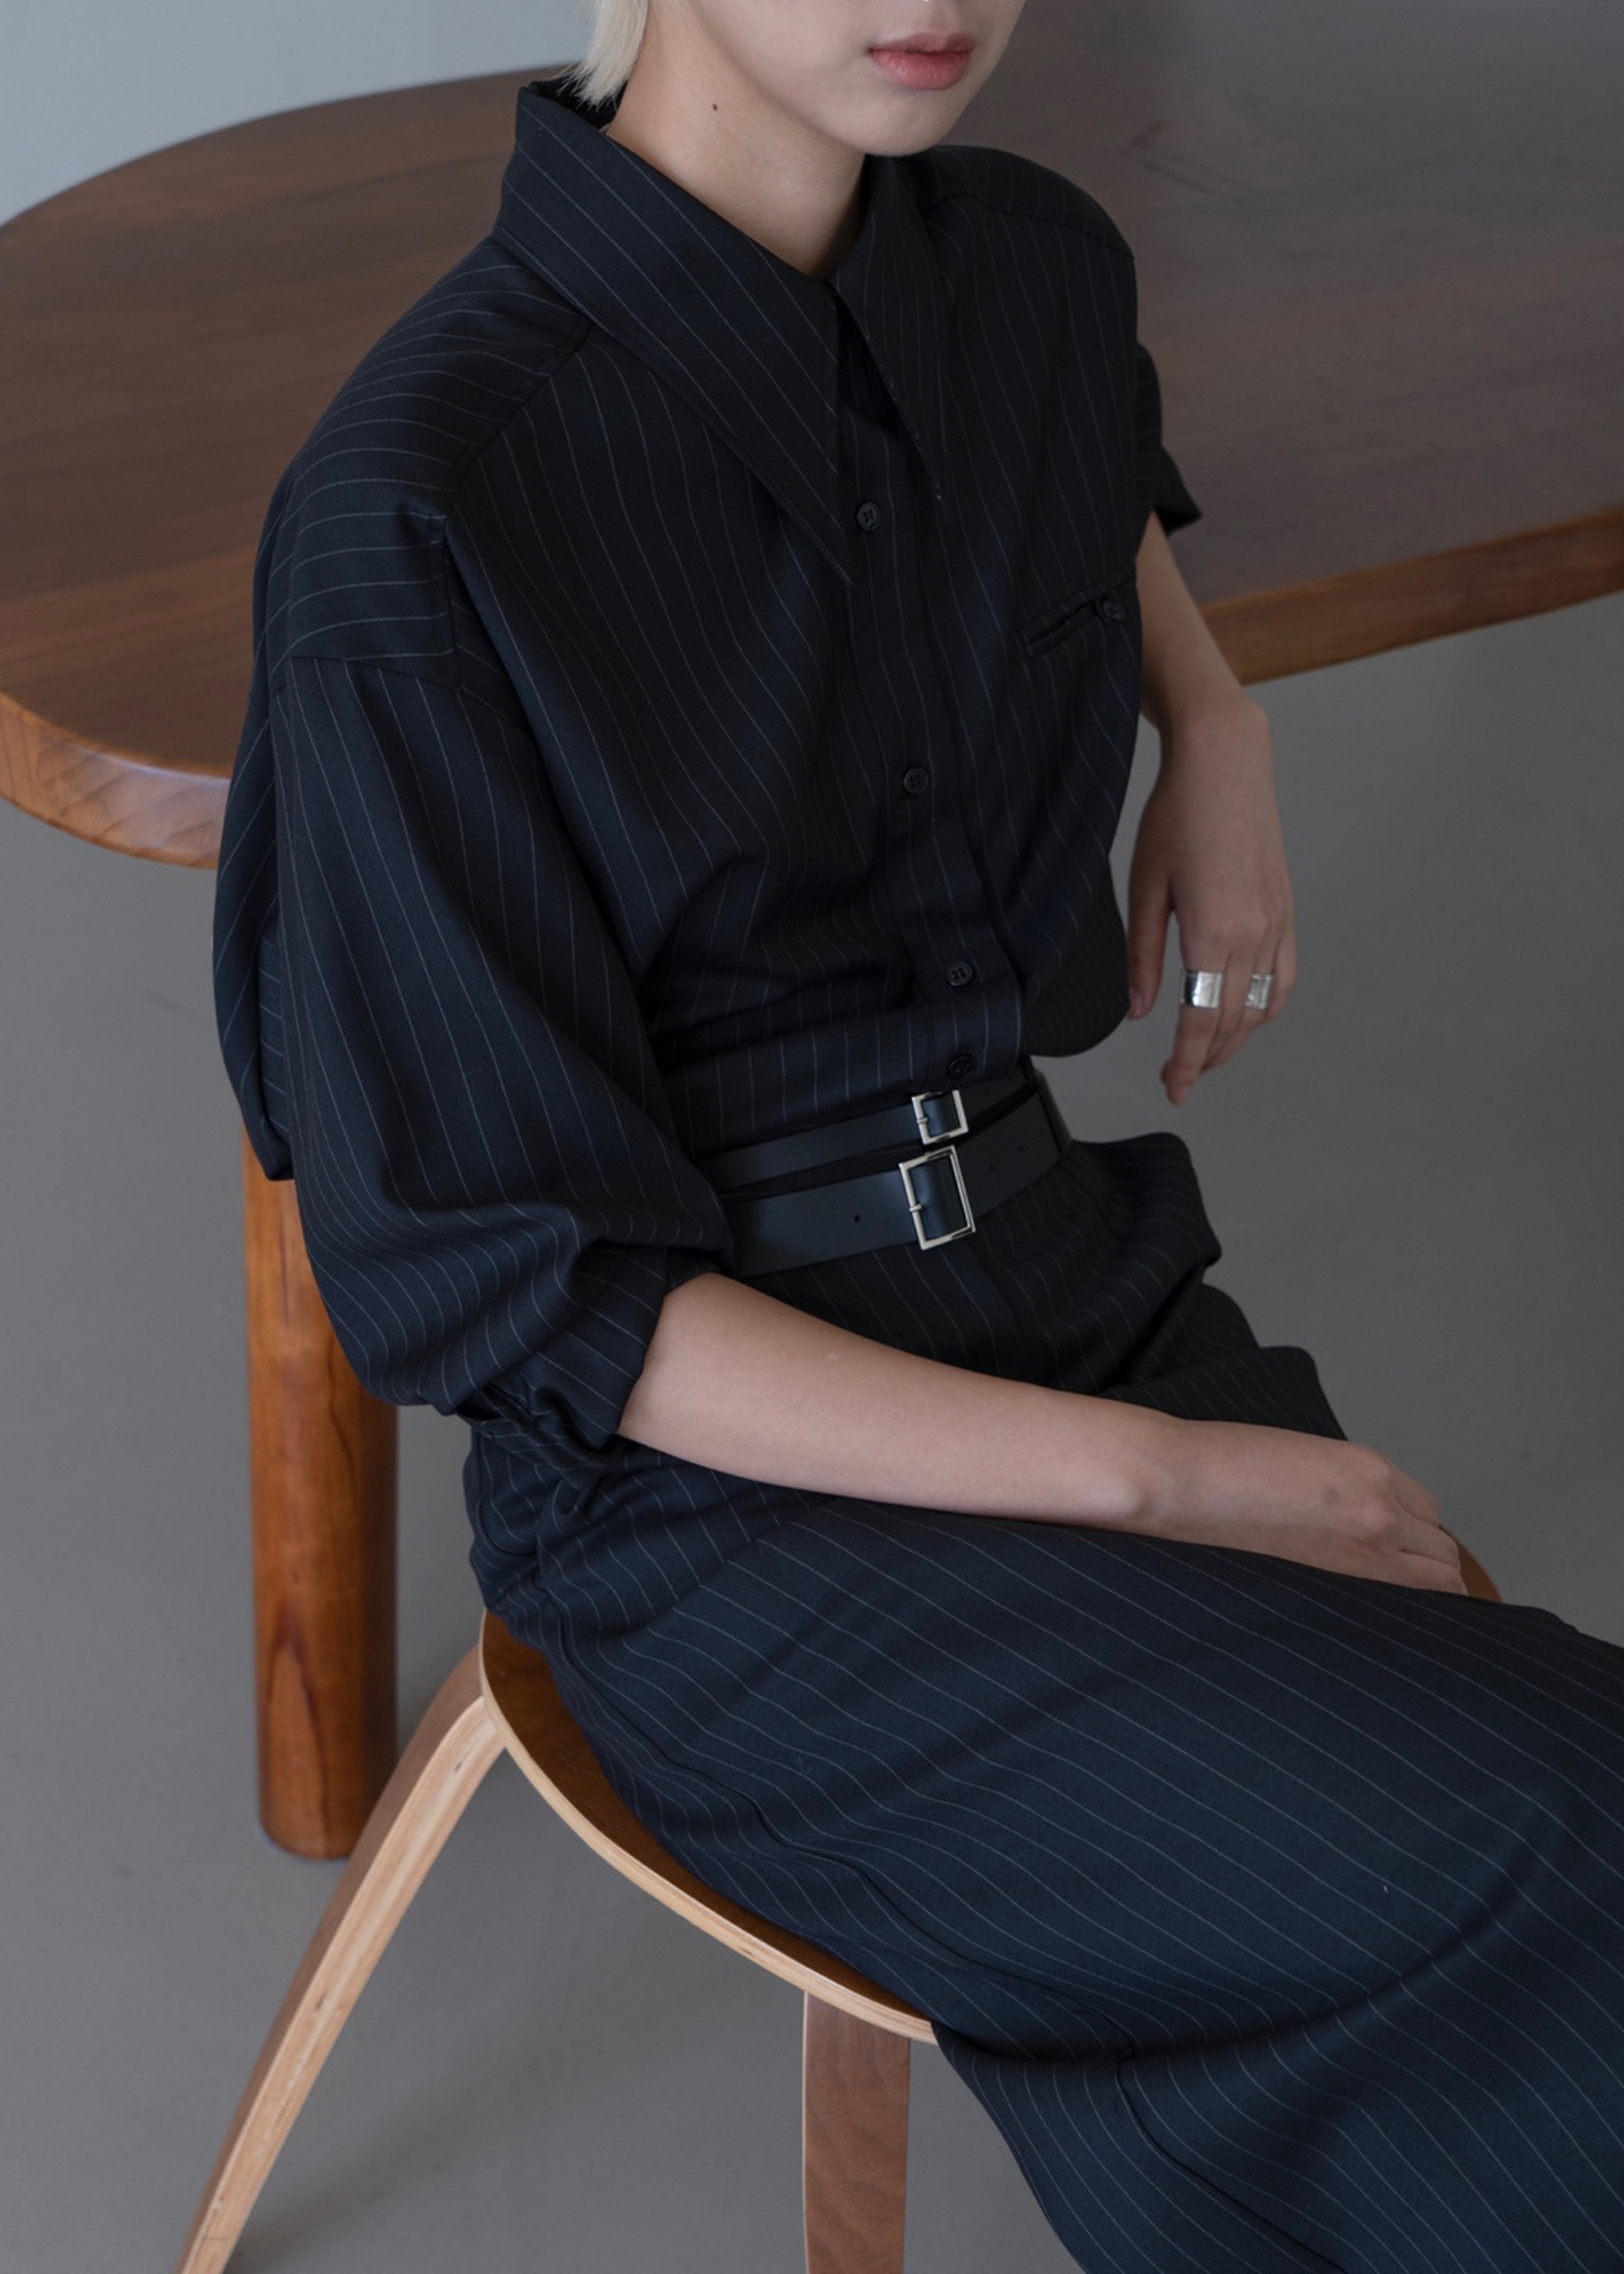 Kerry Button Up Shirt - Black Pinstripe - 8